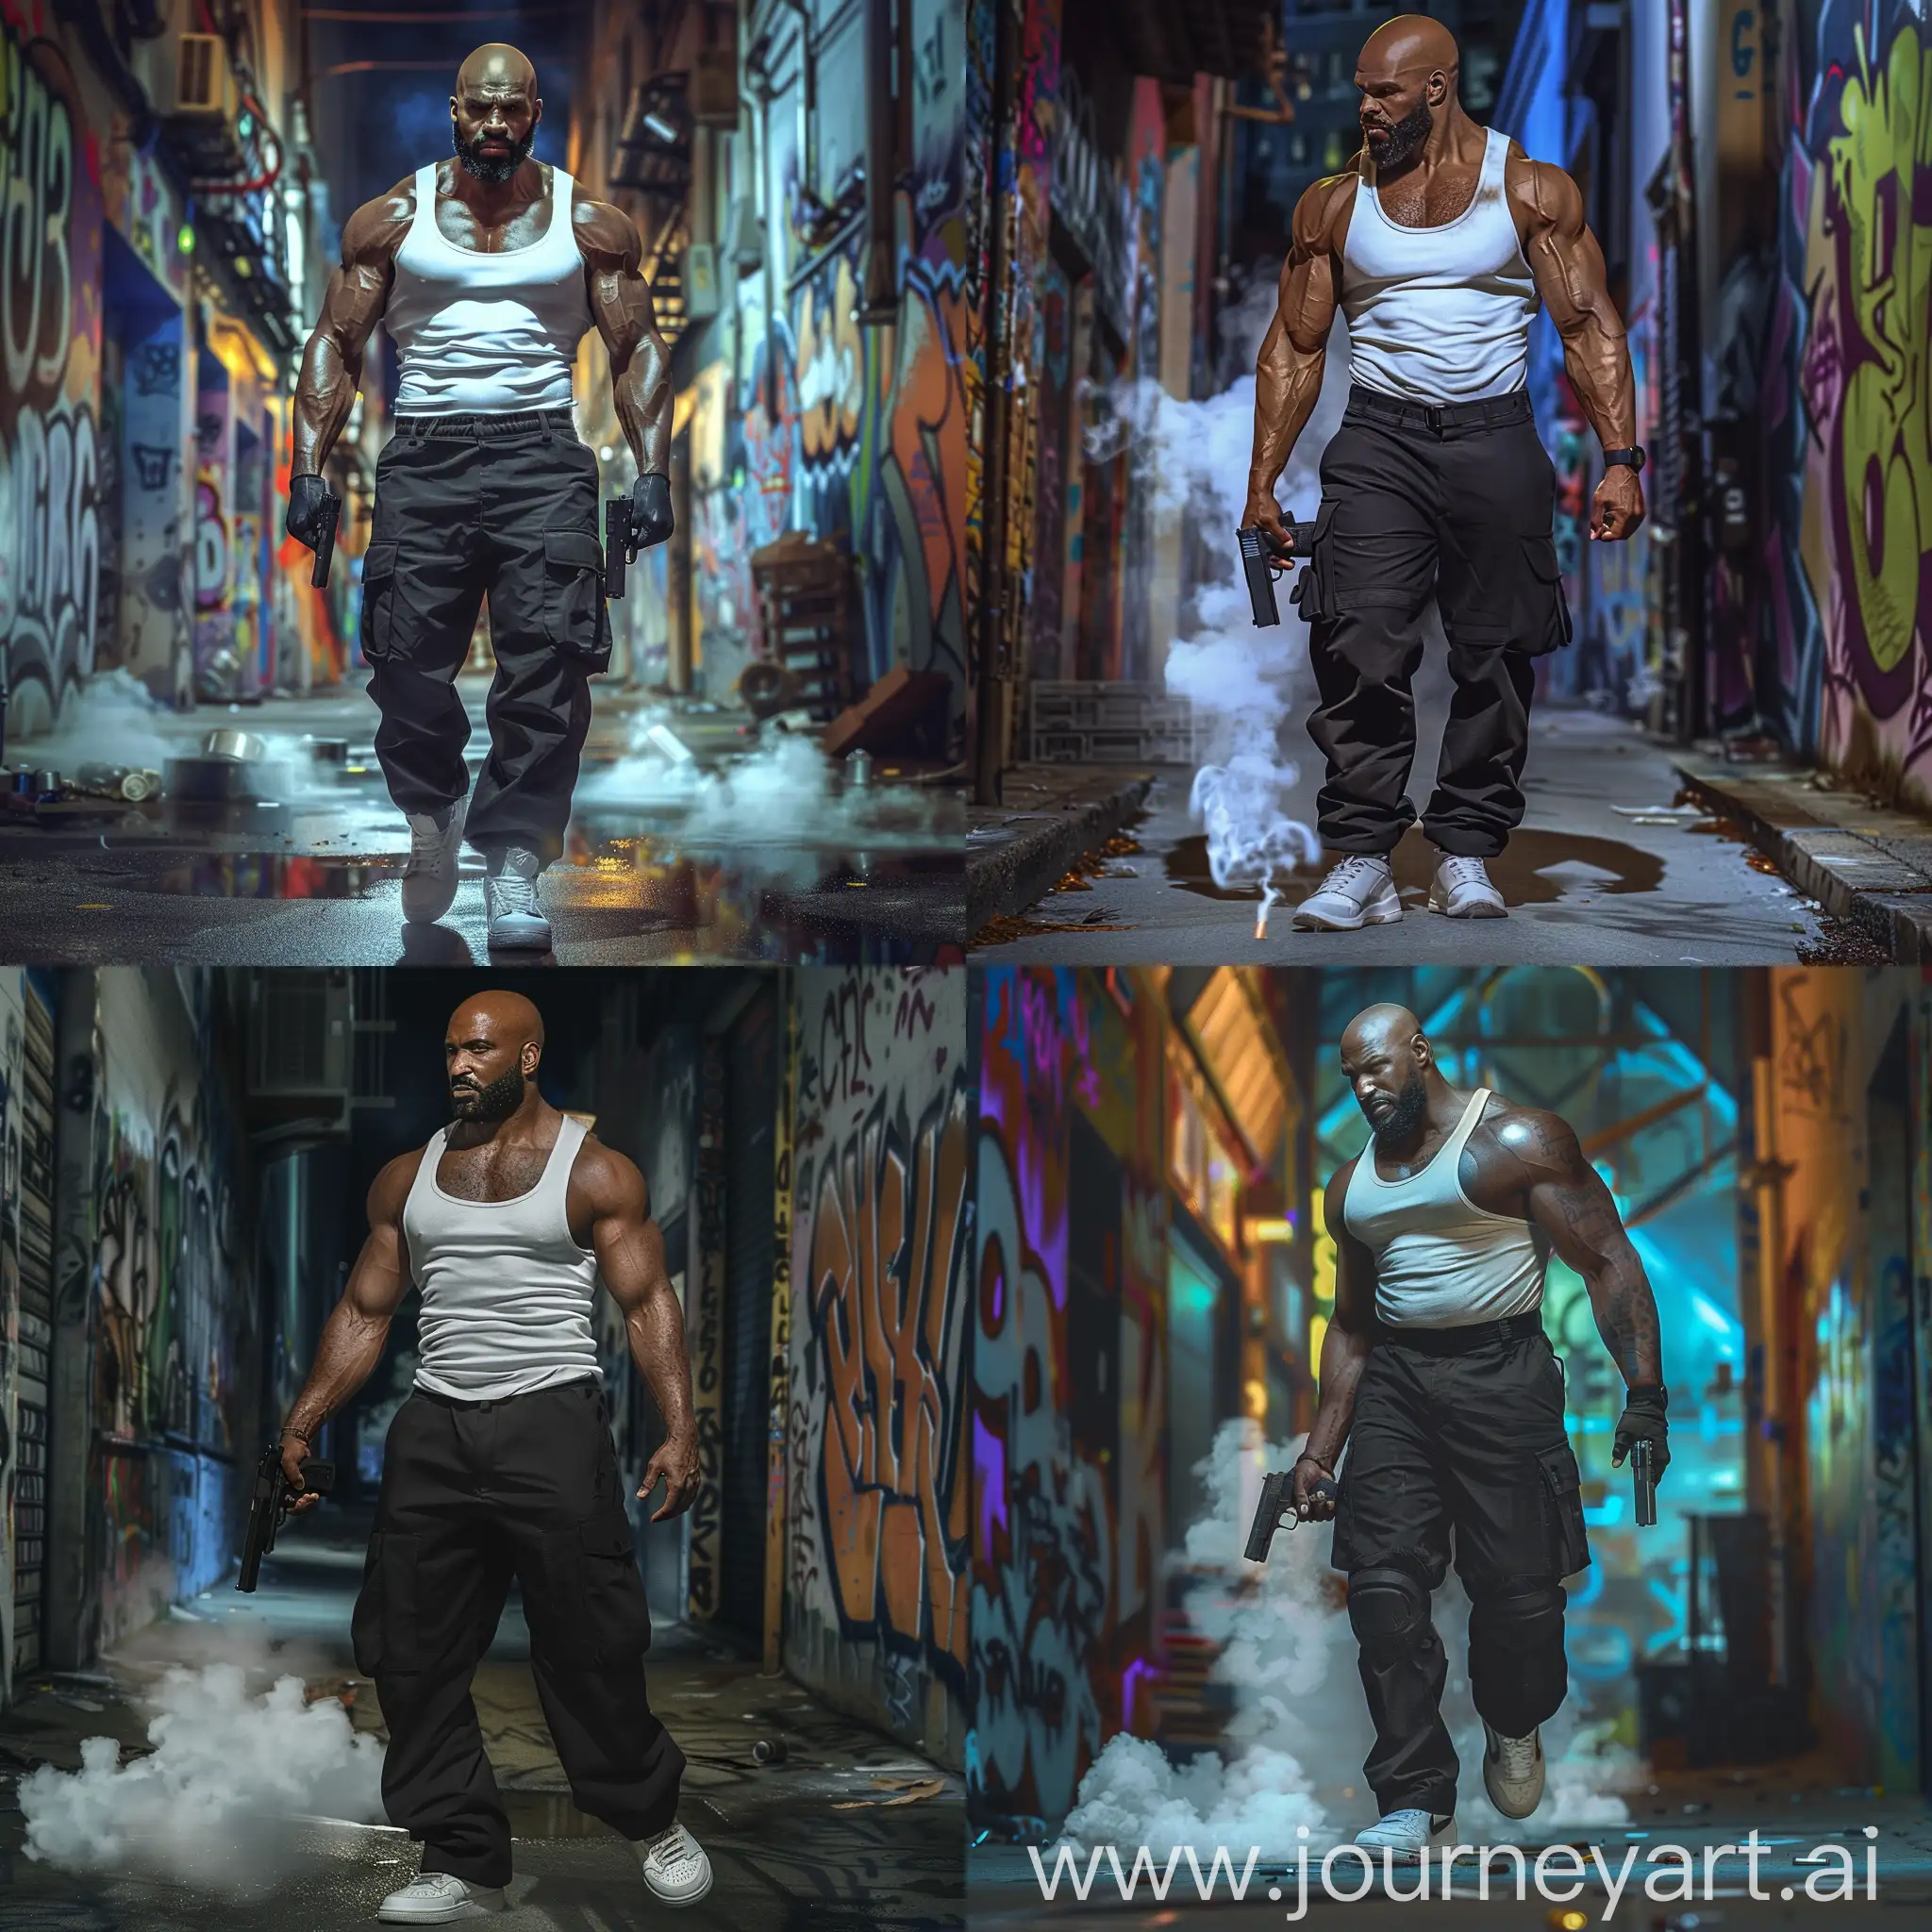 Towering-AfricanAmerican-Man-Strolls-Playfully-Through-Graffiti-Alley-at-Night